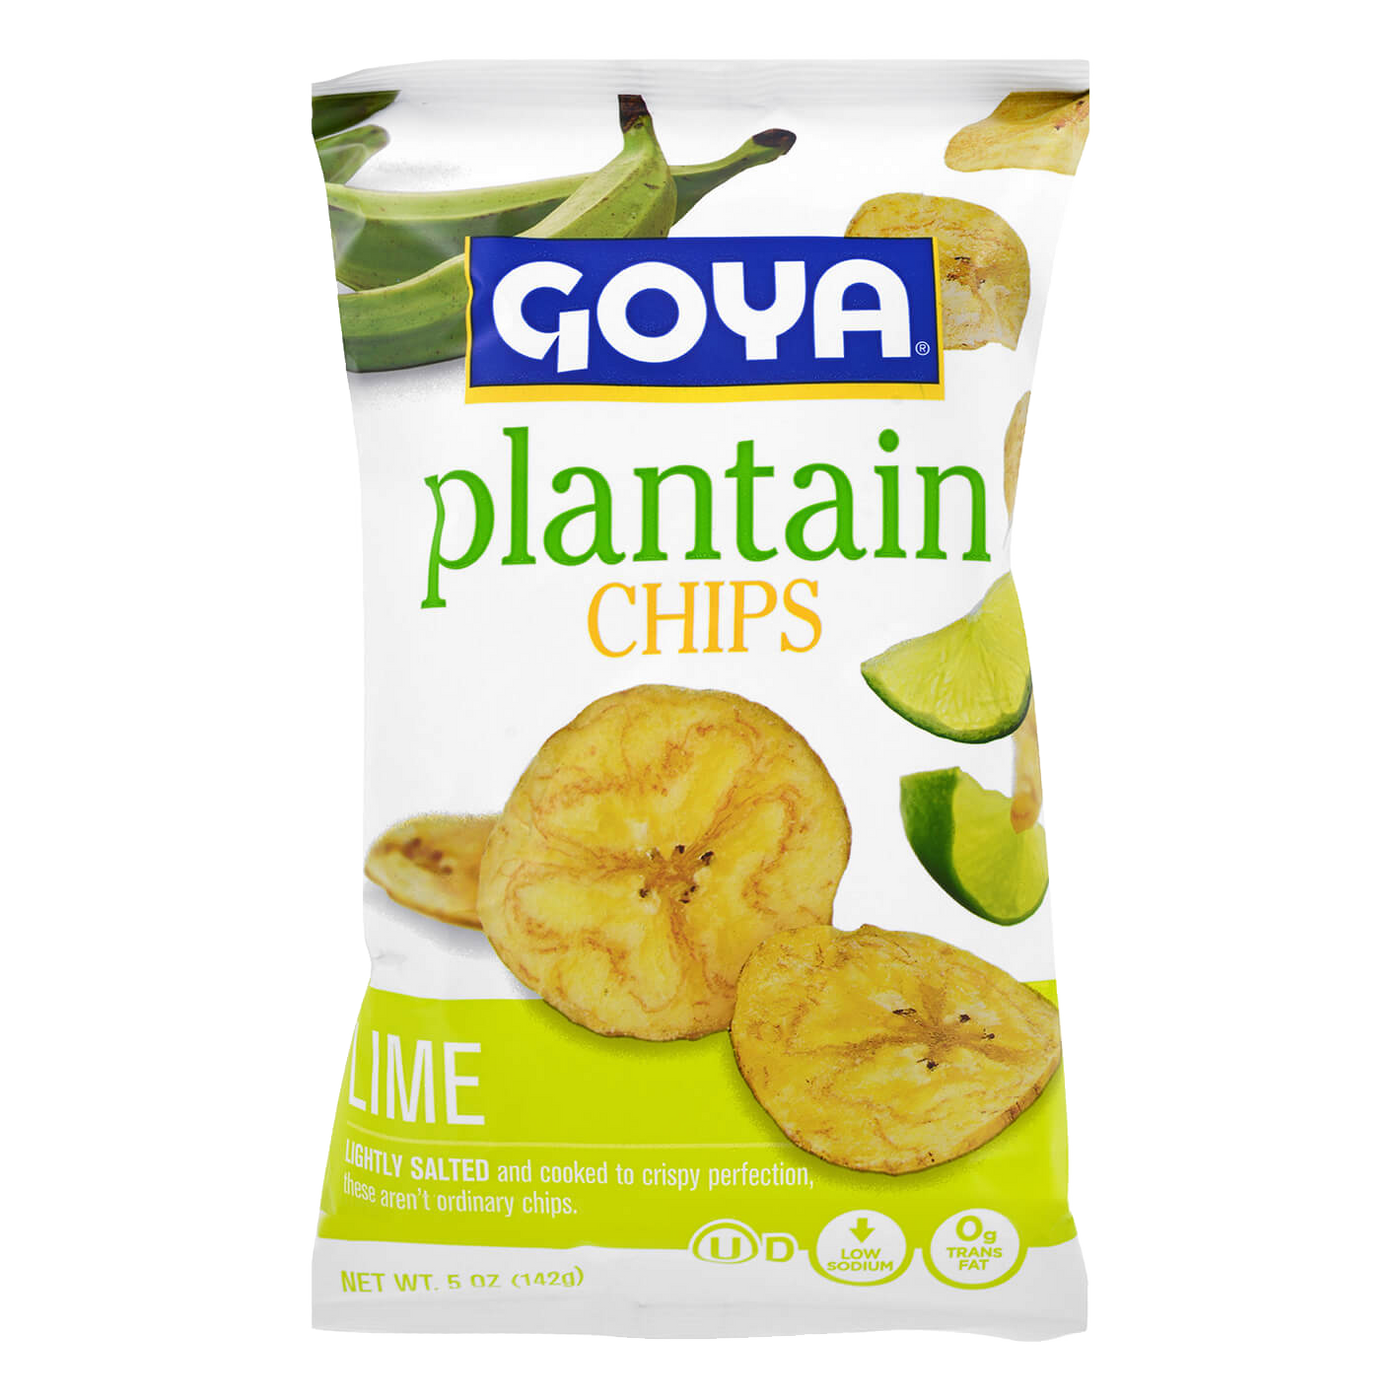   Goya Plantain Chips Lime